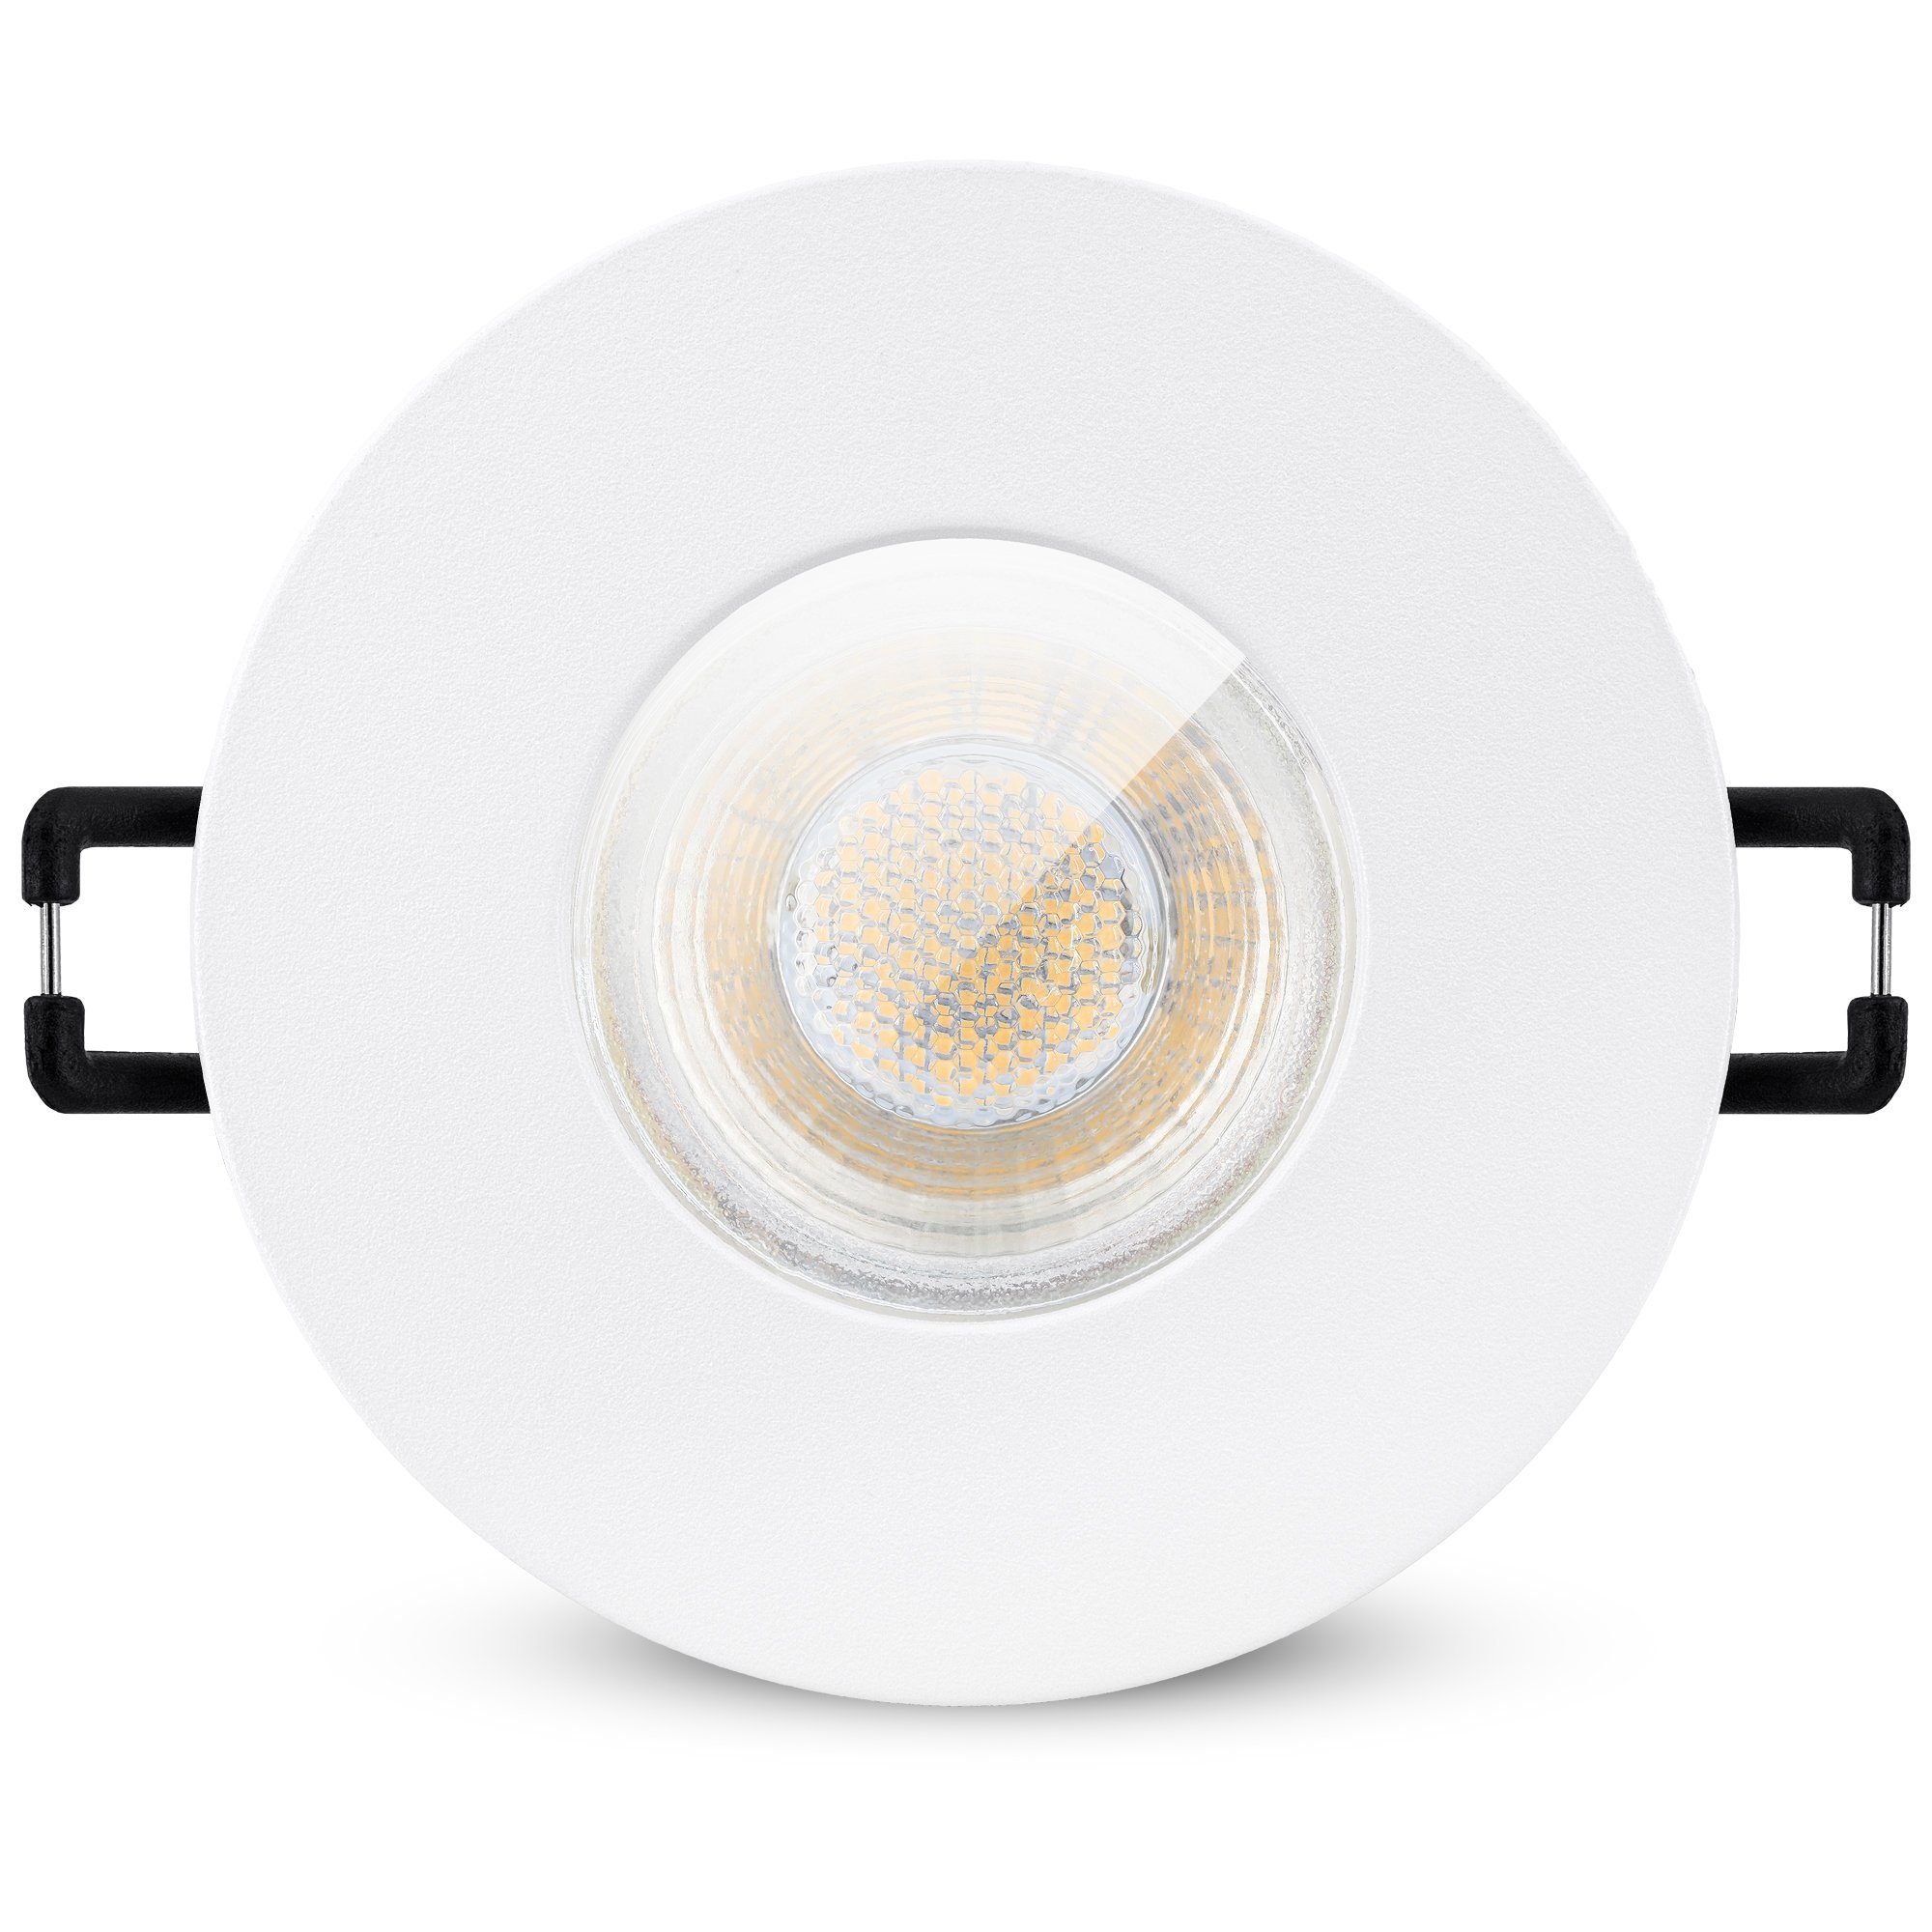 230V - Leuchtmittel LED linovum Leuchtmittel IP65 3W LED Einbaustrahler inklusive warmweiss Einbauspot, GU10 inklusive, Einbaustrahler